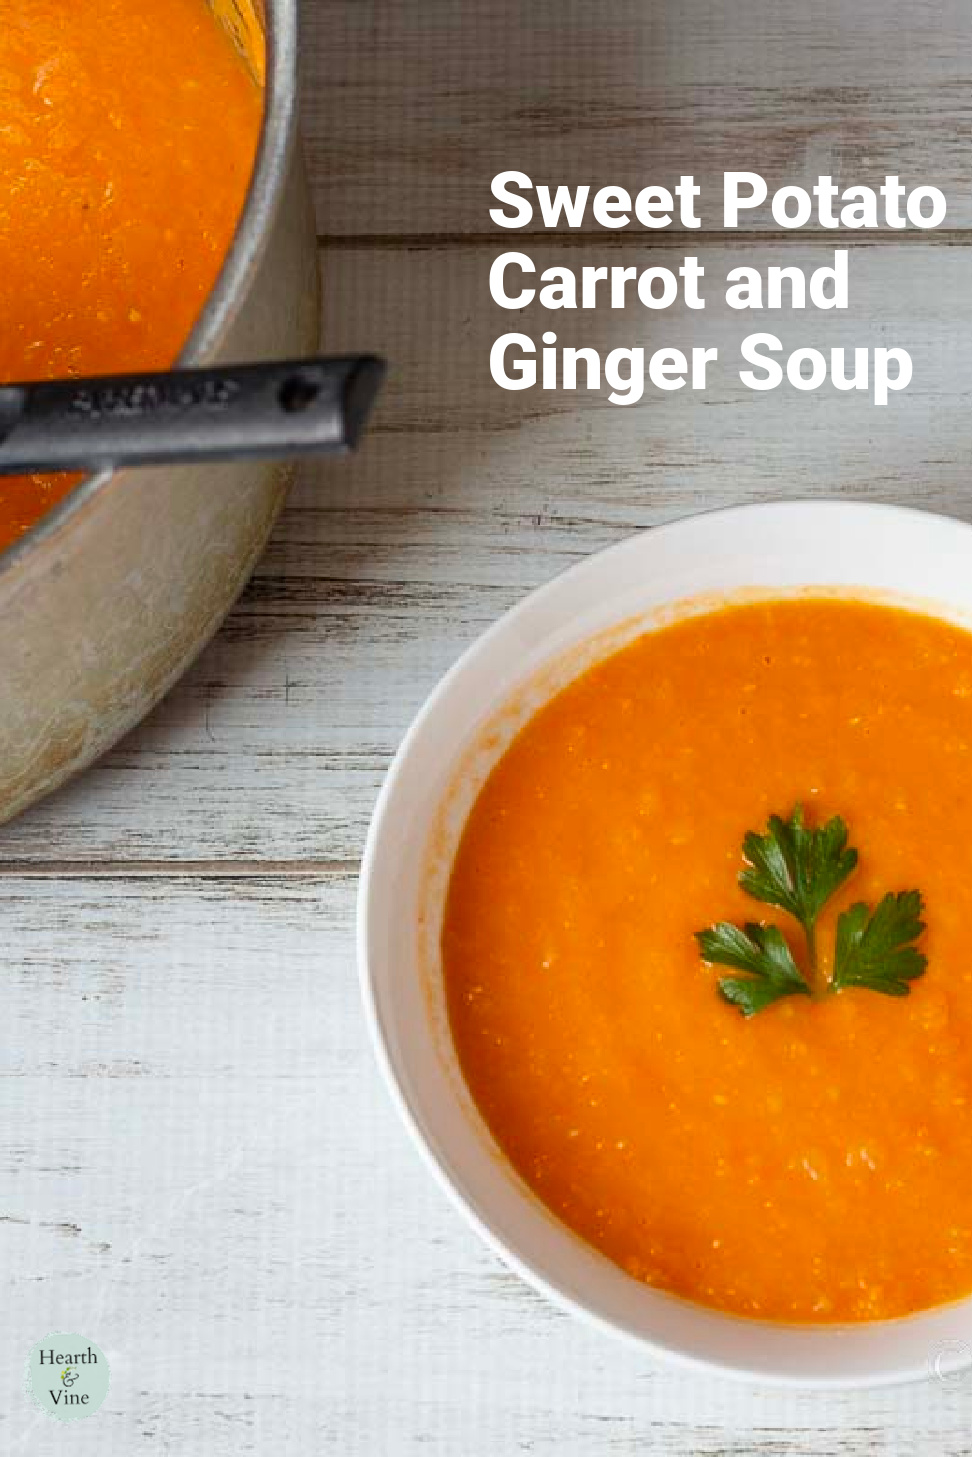 Bowl of sweet potato carrot soup next to a pot of the same soup.